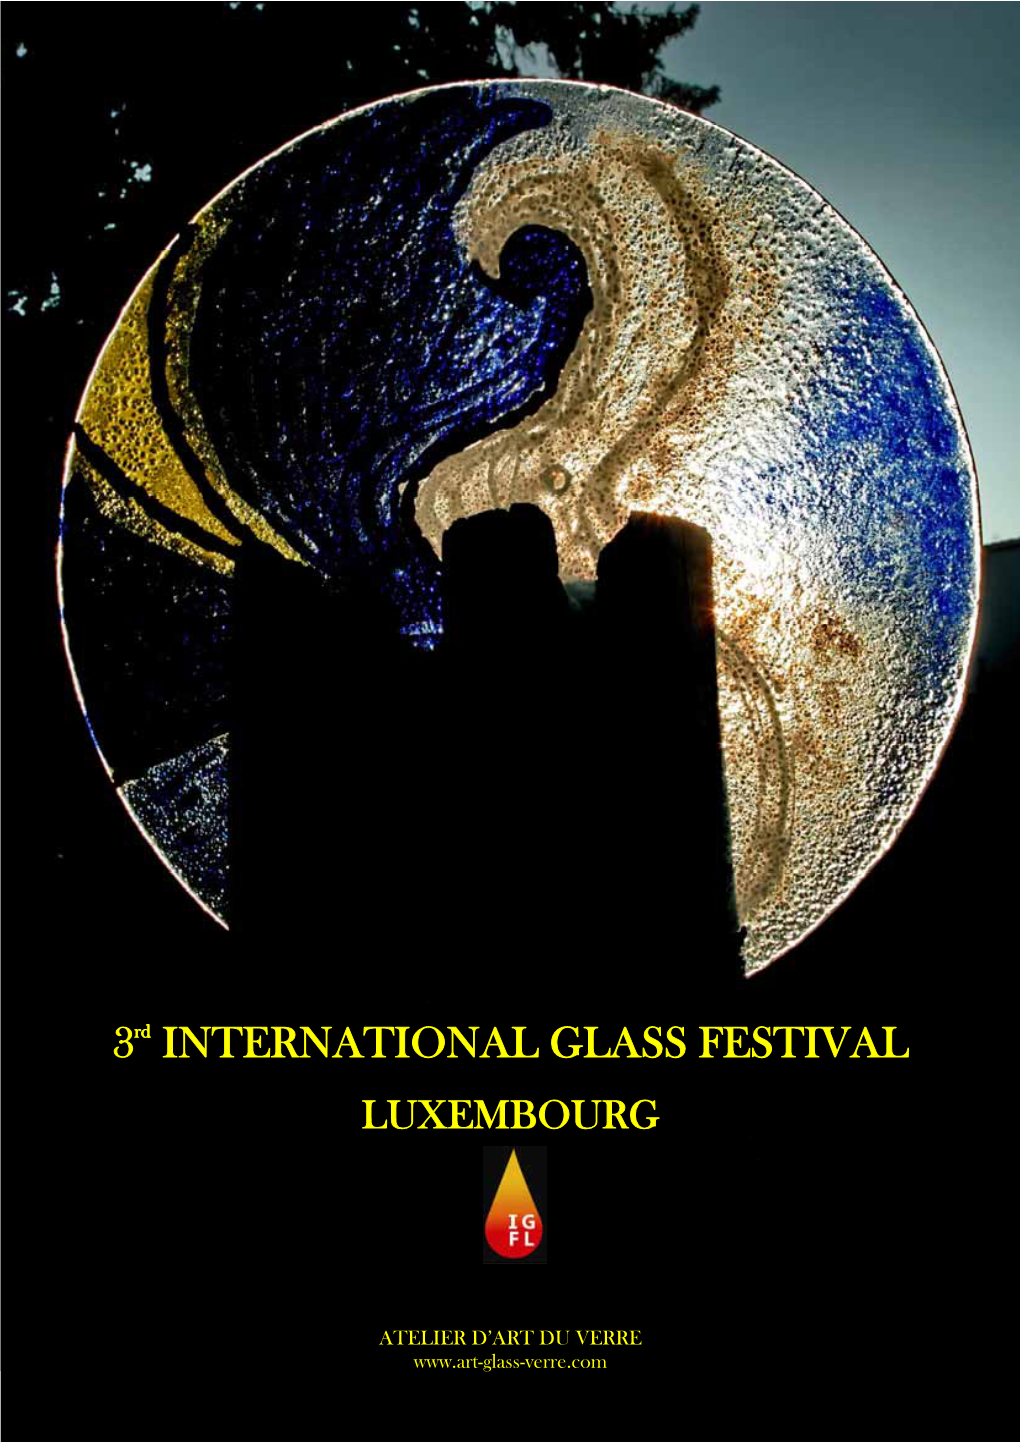 3Rd INTERNATIONAL GLASS FESTIVAL LUXEMBOURG